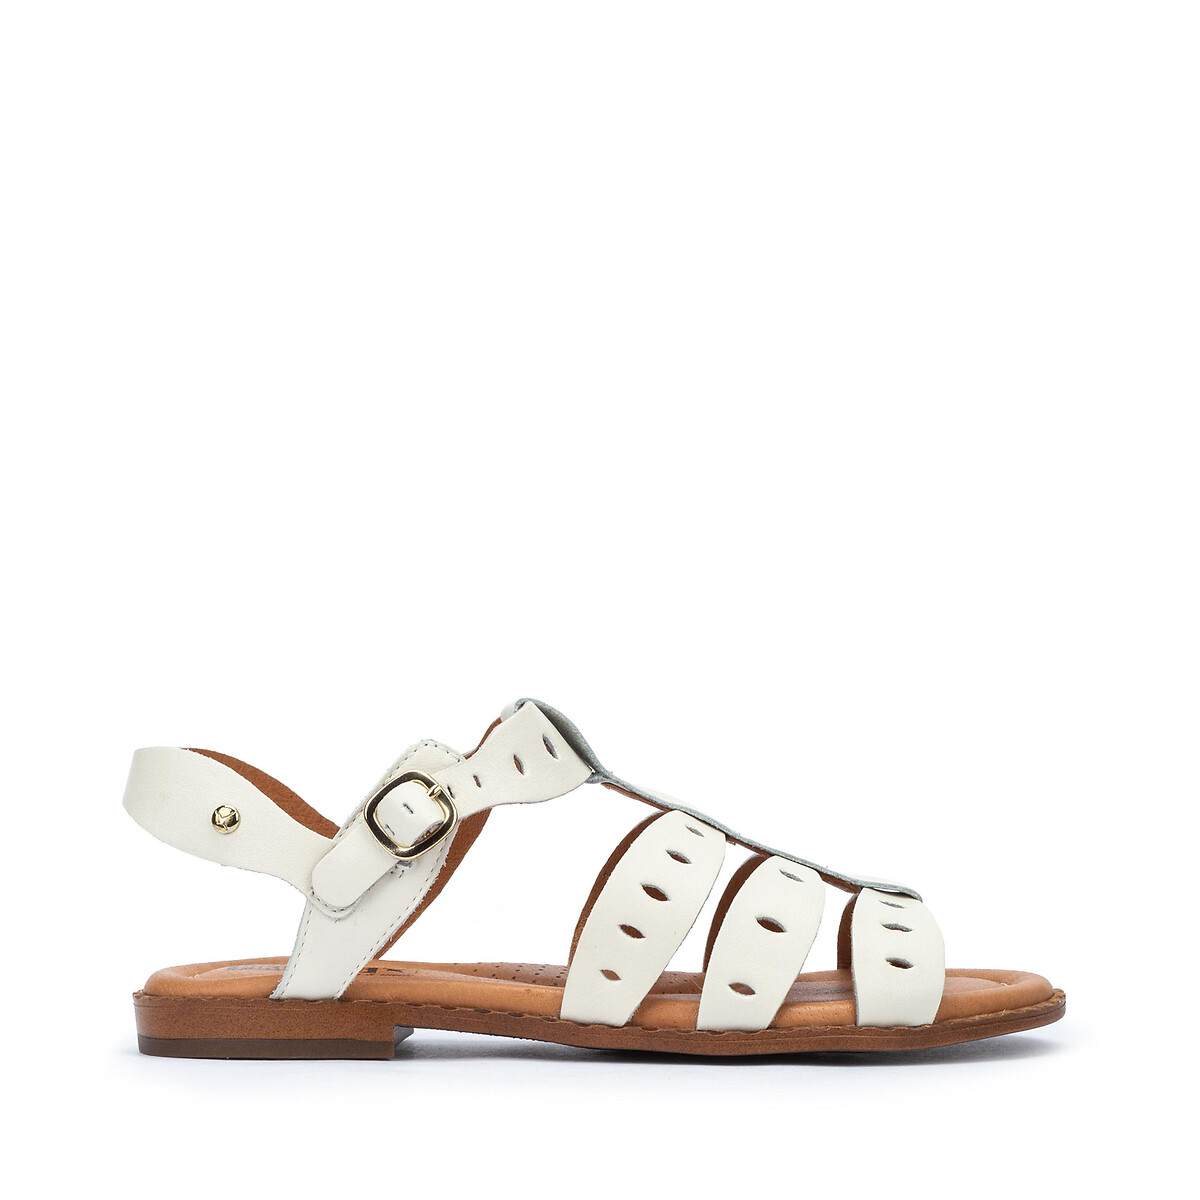 Algar leather sandals, white, Pikolinos | La Redoute